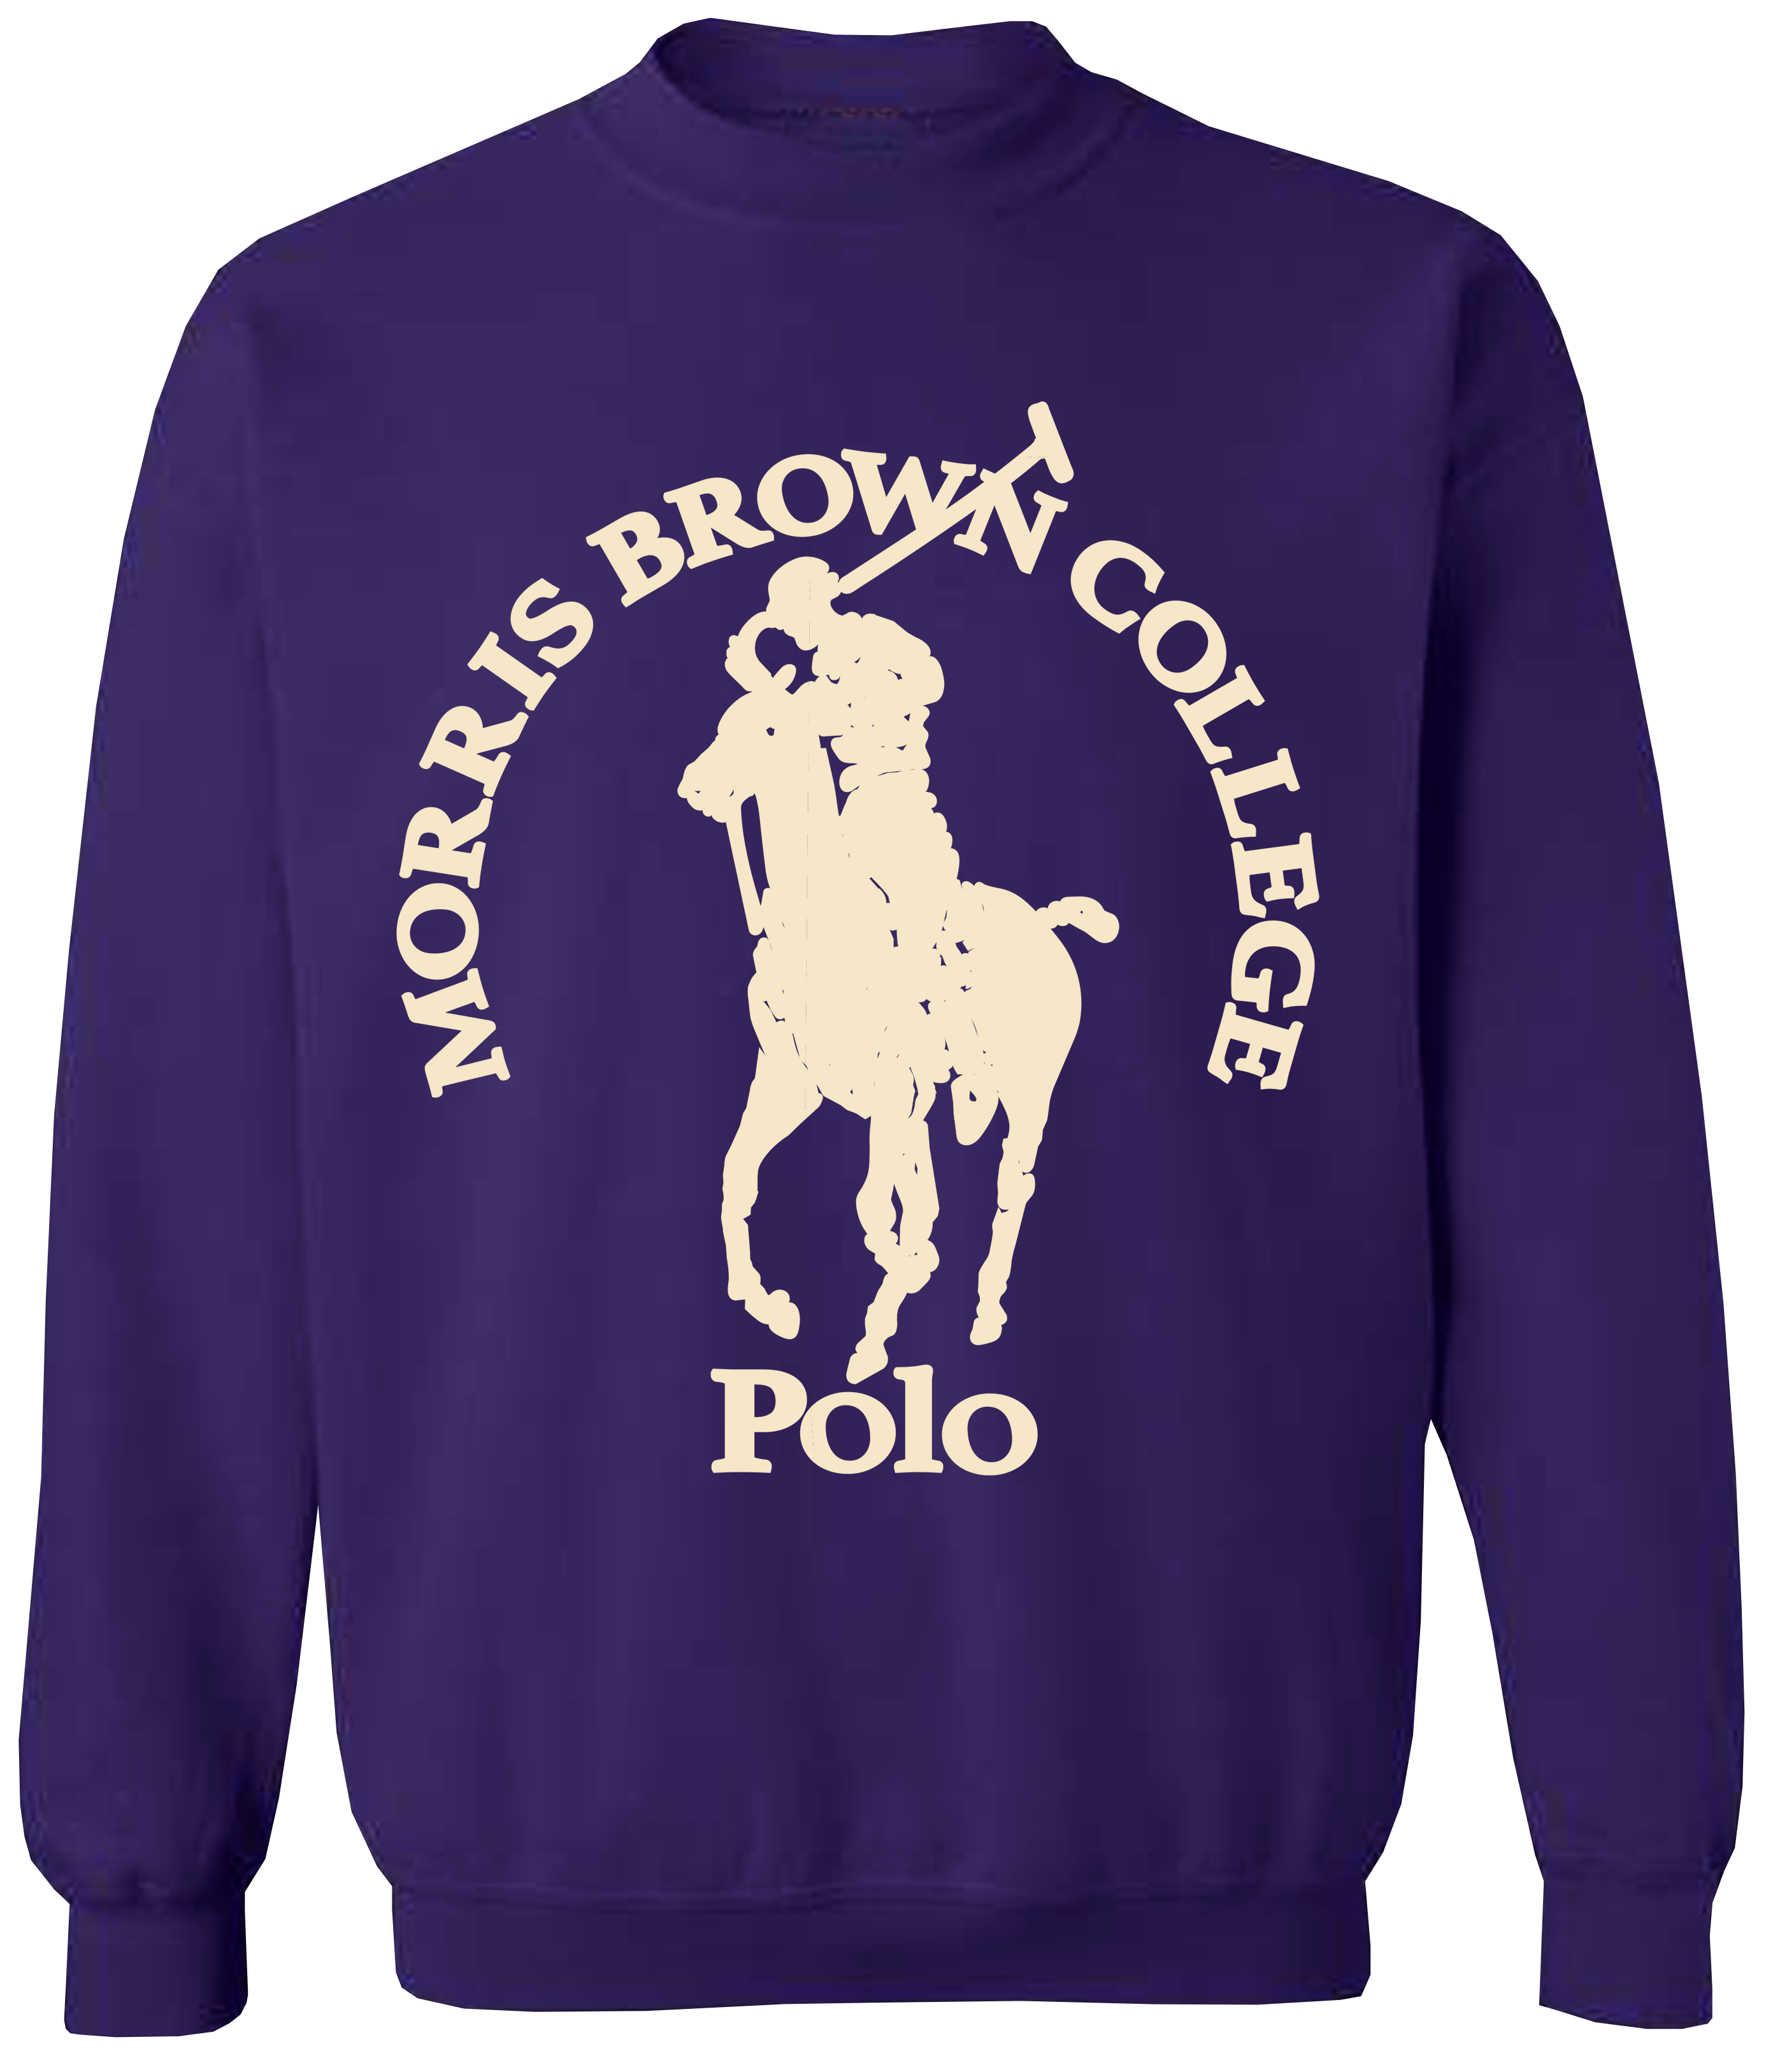 HBCU Polo Crewneck Sweatshirt - Morris Brown